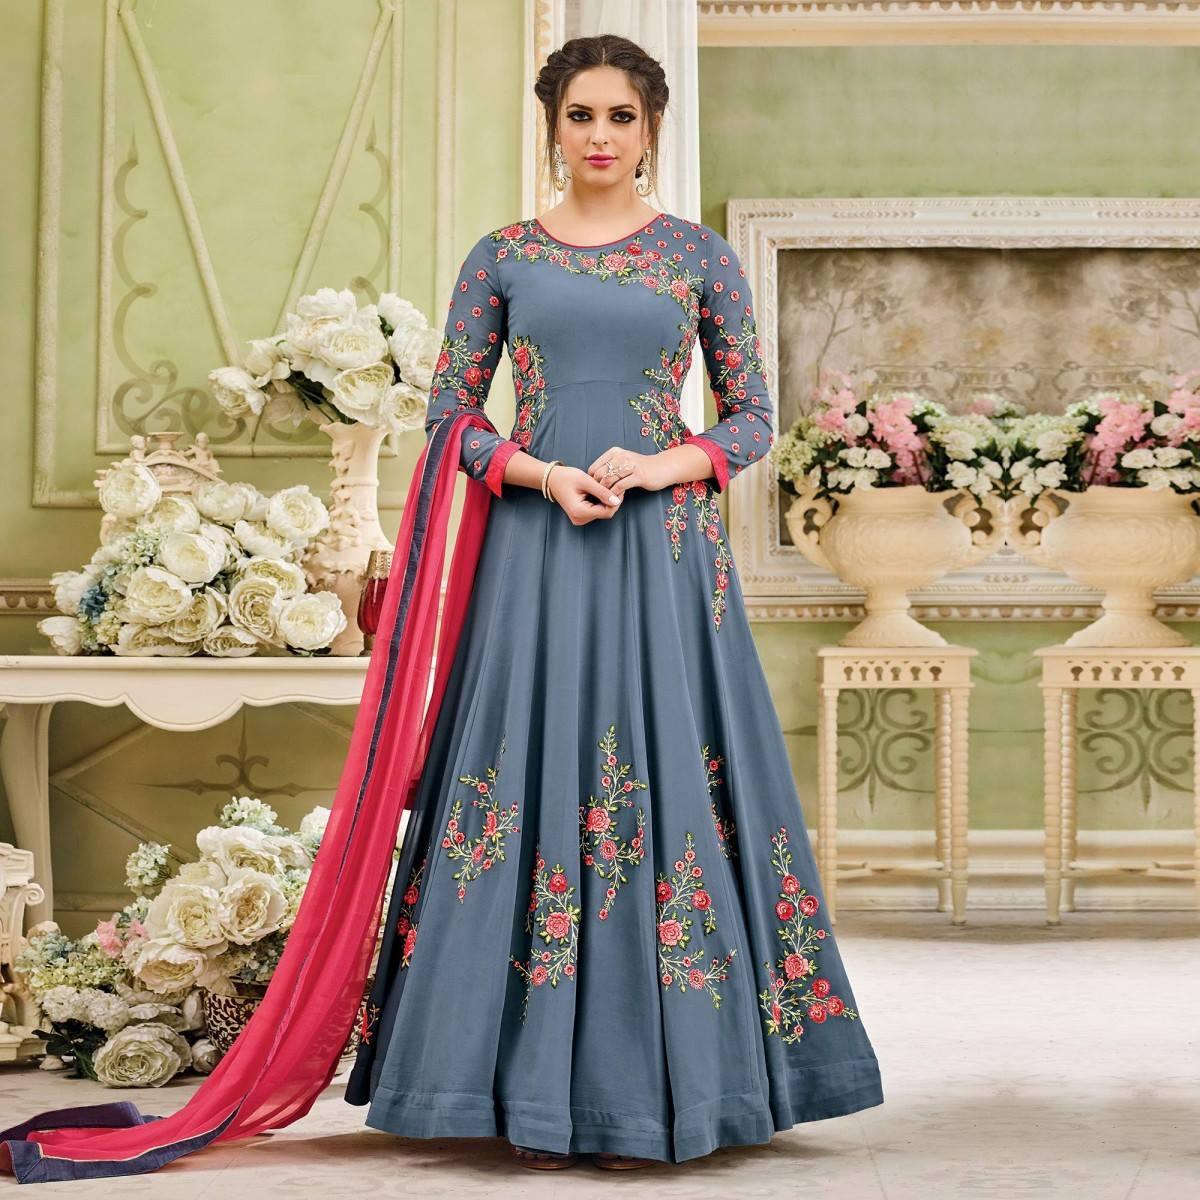 Anarkali Dress In Lucknow, Uttar Pradesh At Best Price | Anarkali Dress  Manufacturers, Suppliers In Lucknow